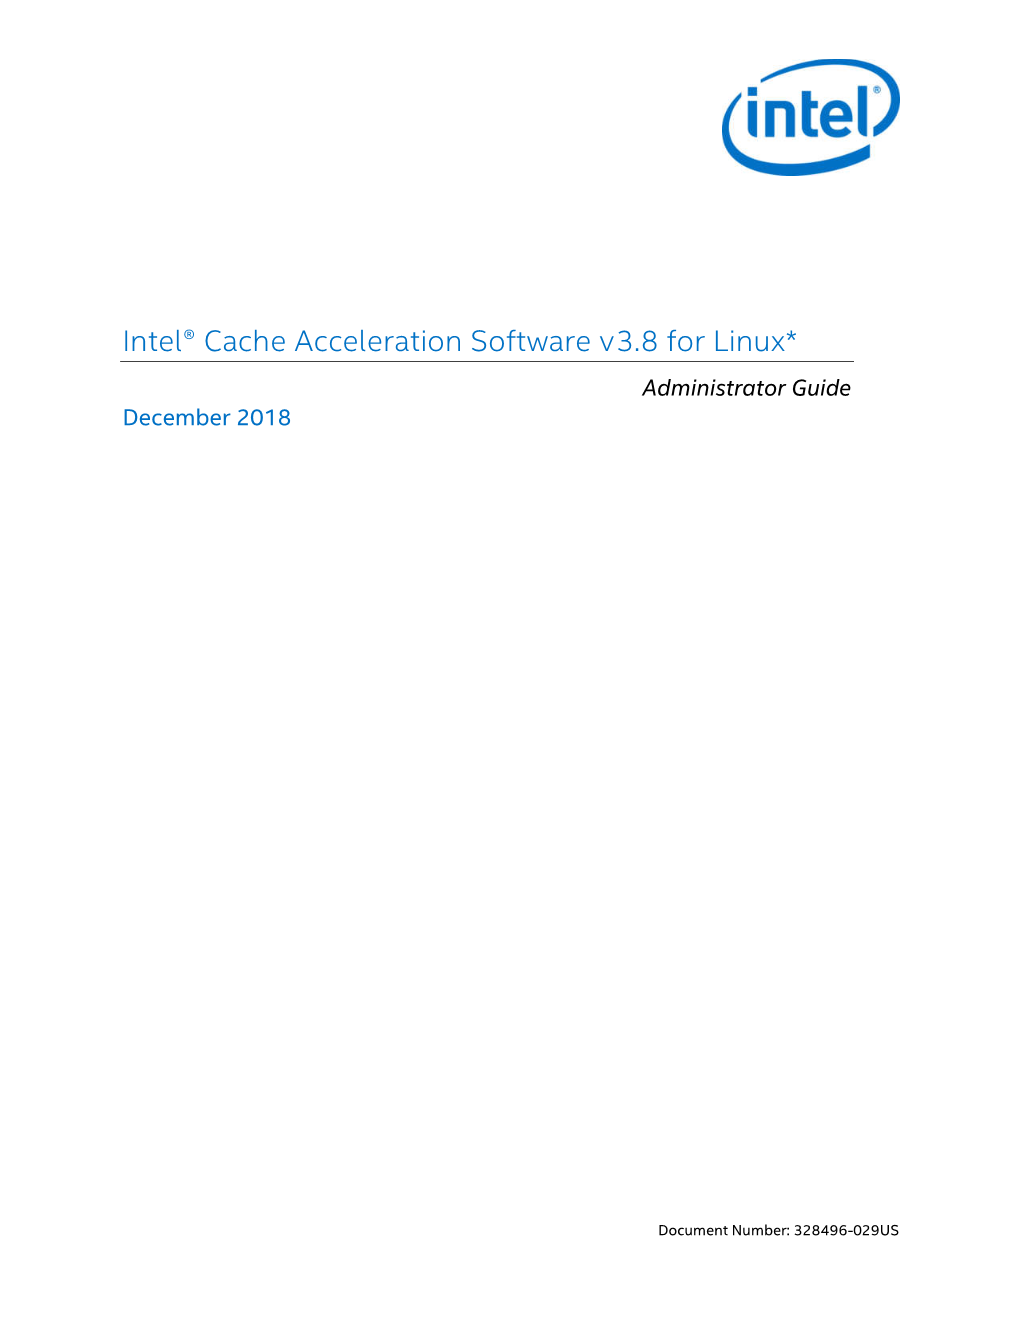 Intel® Cache Acceleration Software V3.8 for Linux* Administrator Guide December 2018